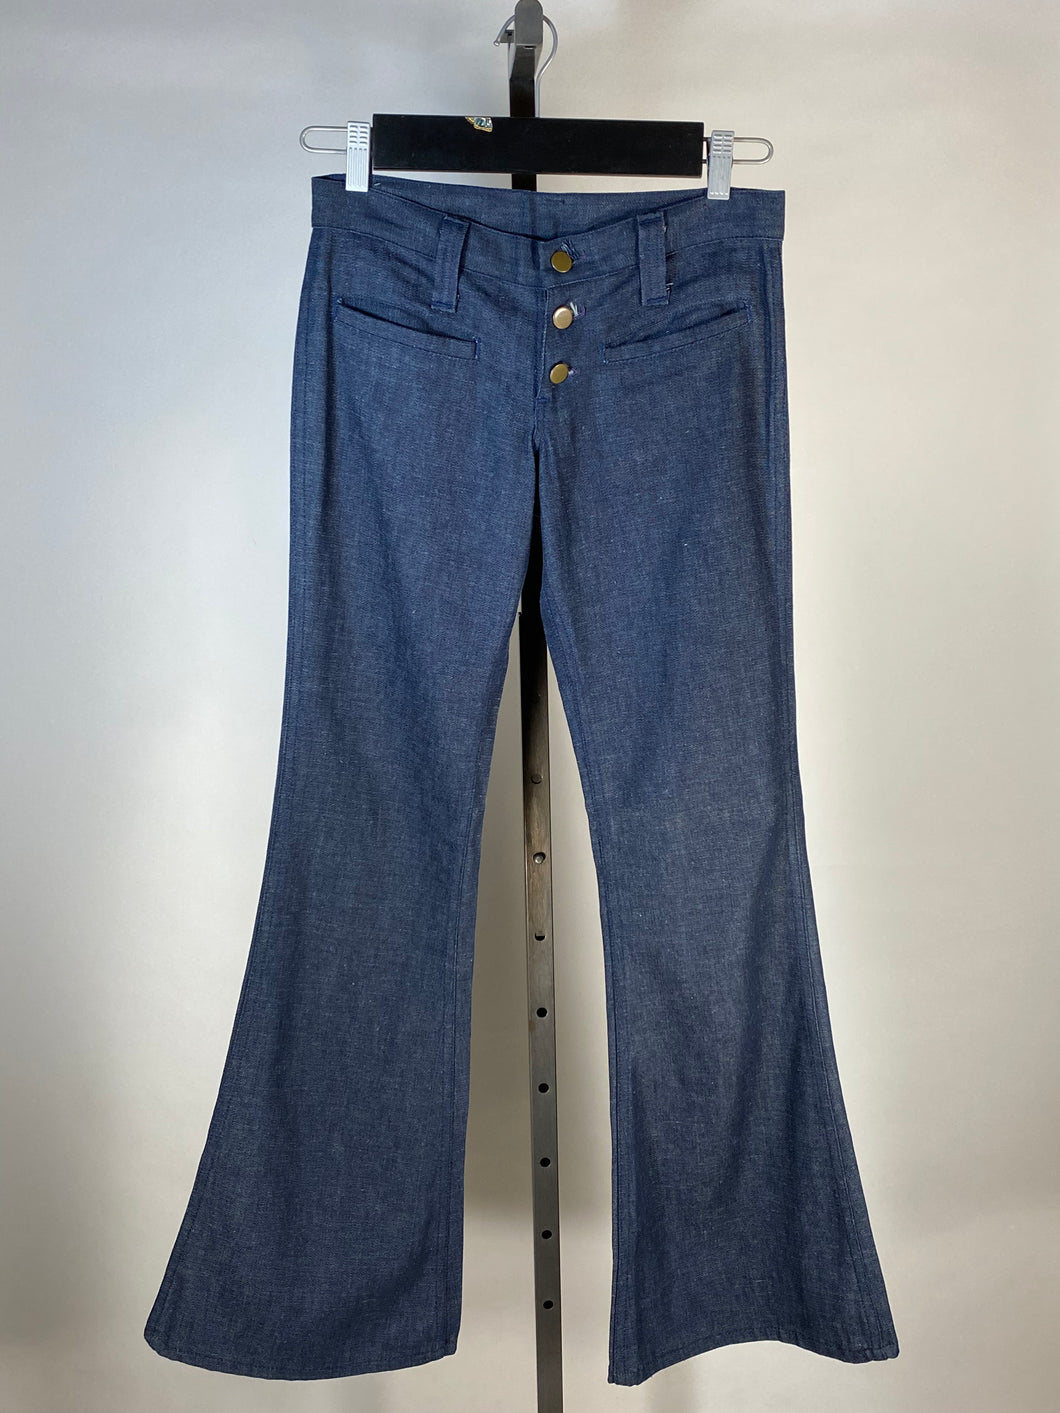 1970's RARE low waist button fly UNWORN Lee bell bottom denim jeans 29